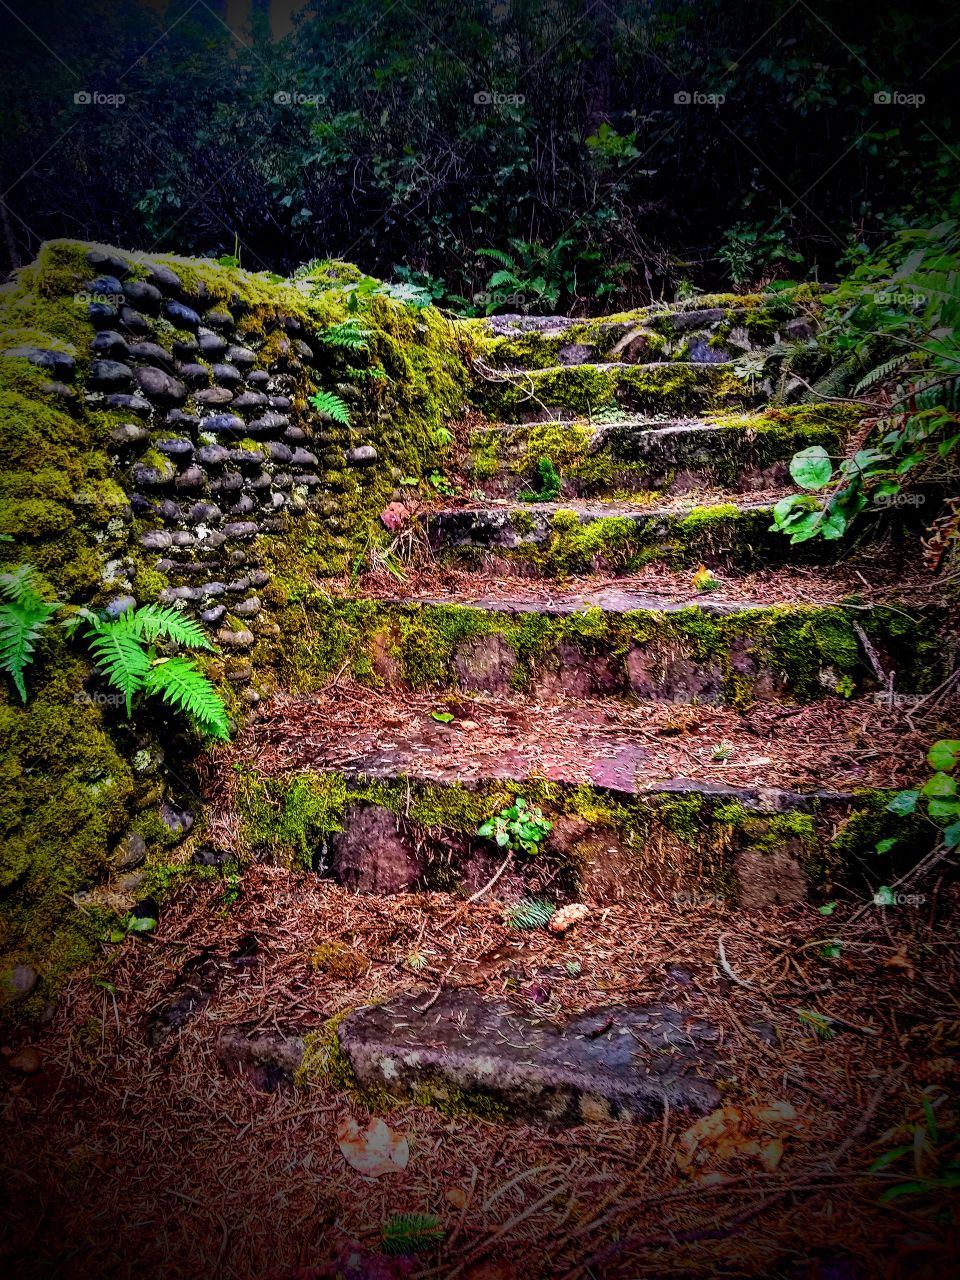 Serene Mossy Stone Steps "Road Less Traveled"